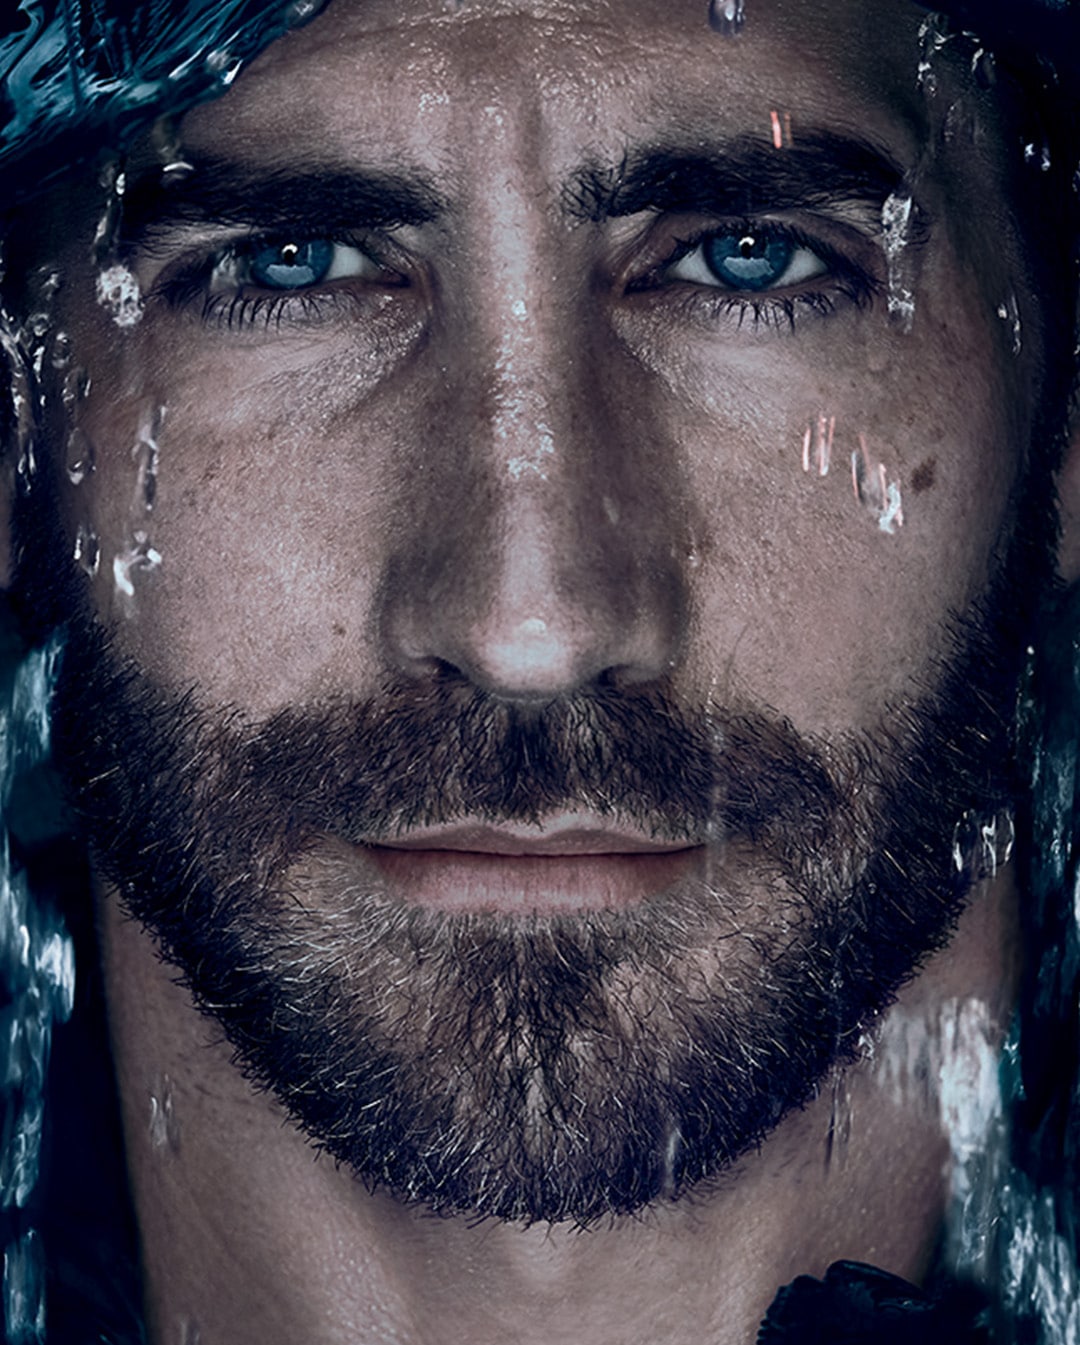 Introducing the new #PradaLunaRossaOcean - Jake Gyllenhaal